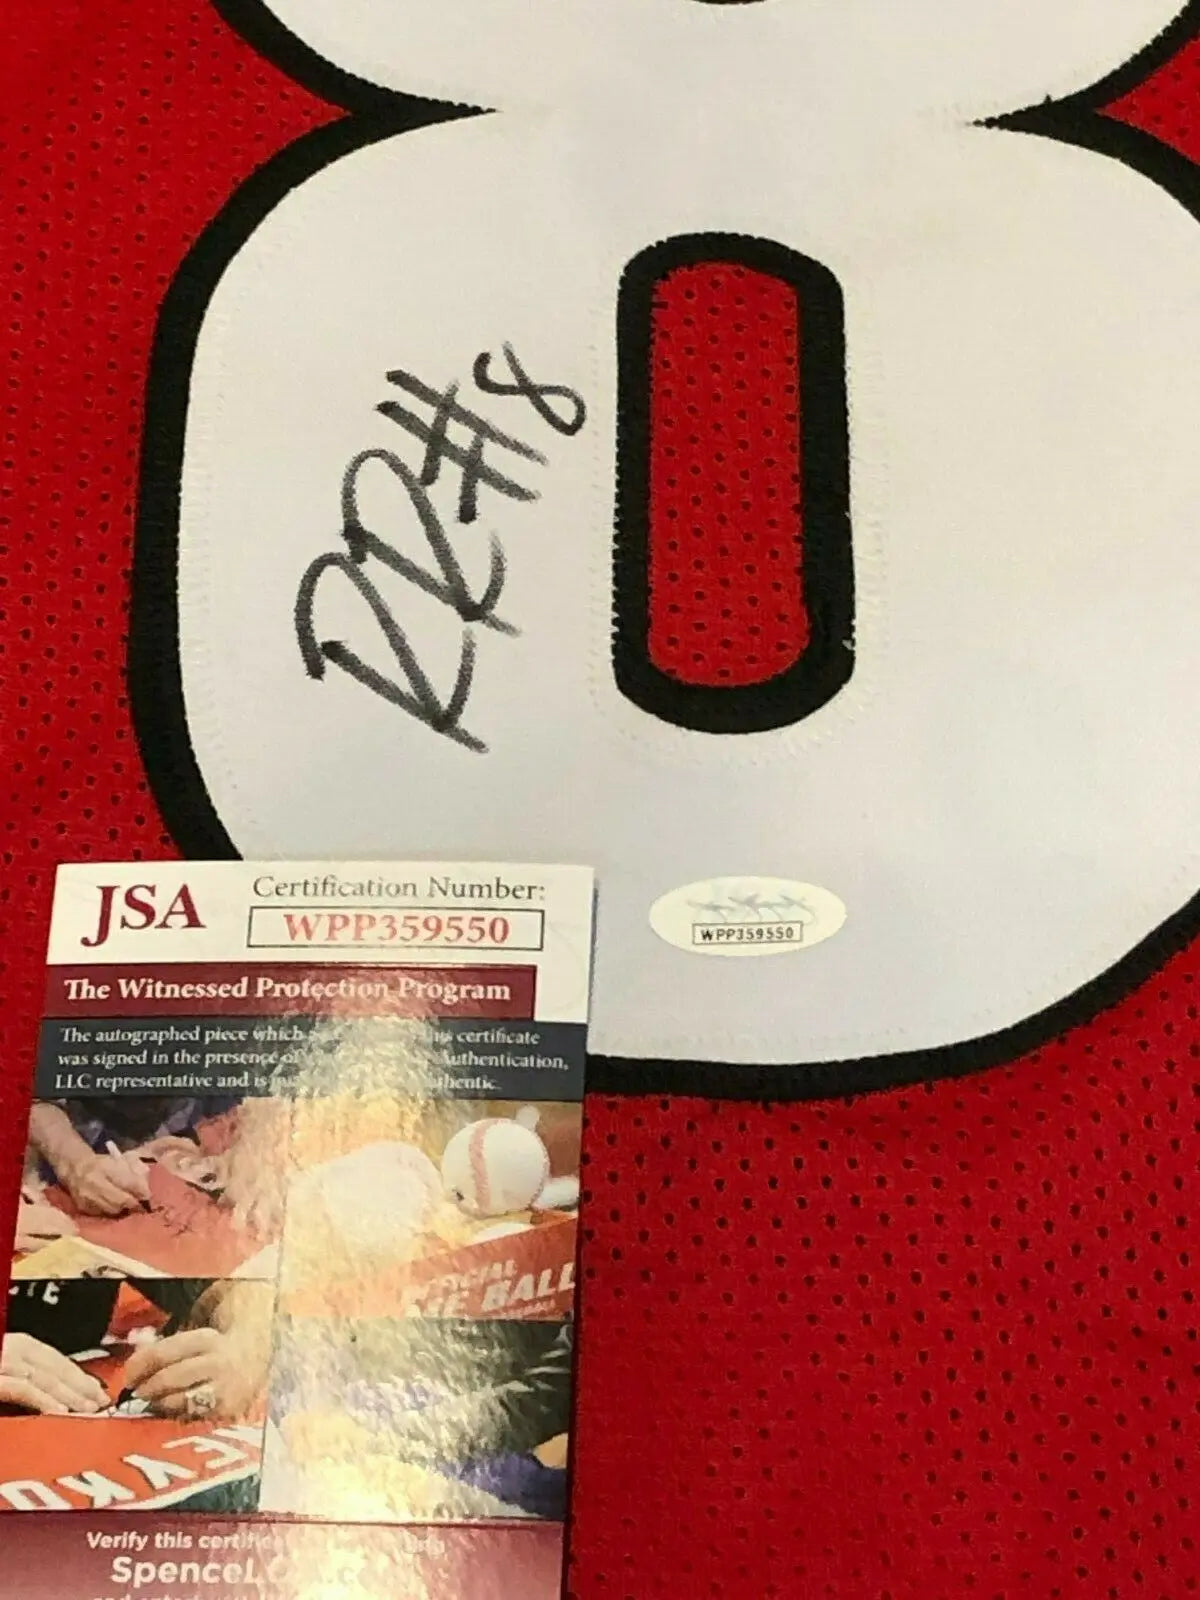 MVP Authentics Georgia Bulldogs Riley Ridley Autographed Signed Jersey Jsa Coa 107.10 sports jersey framing , jersey framing